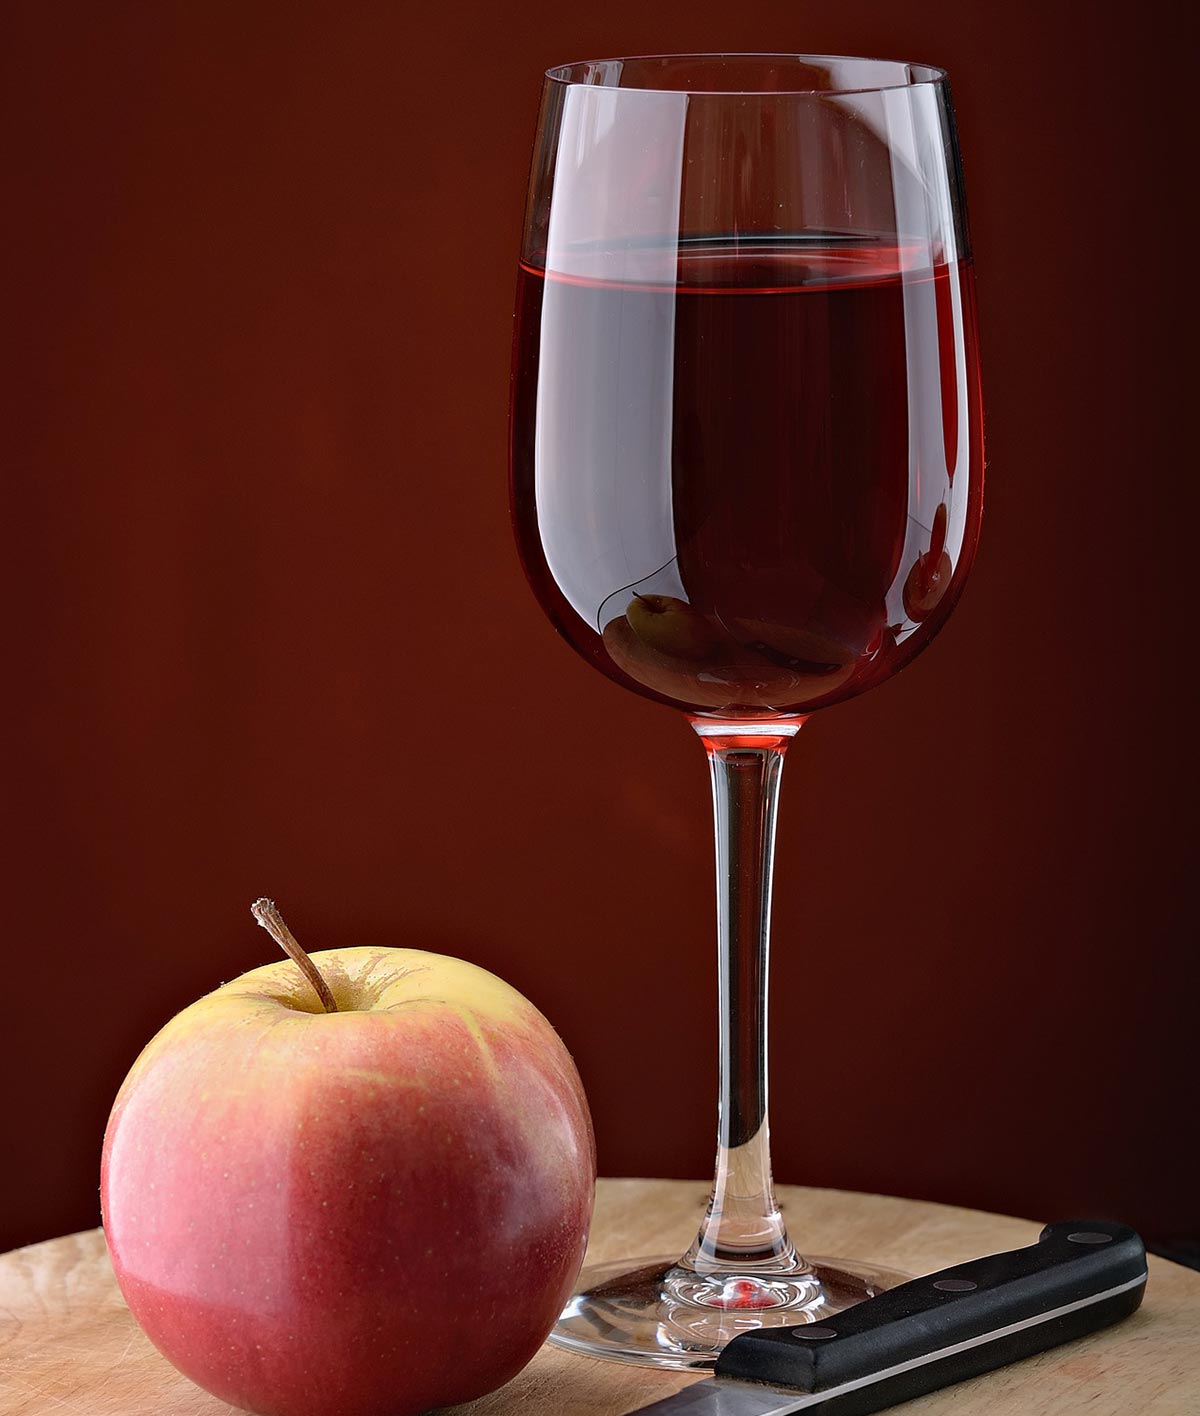 1 glass of Fruit wine & apple